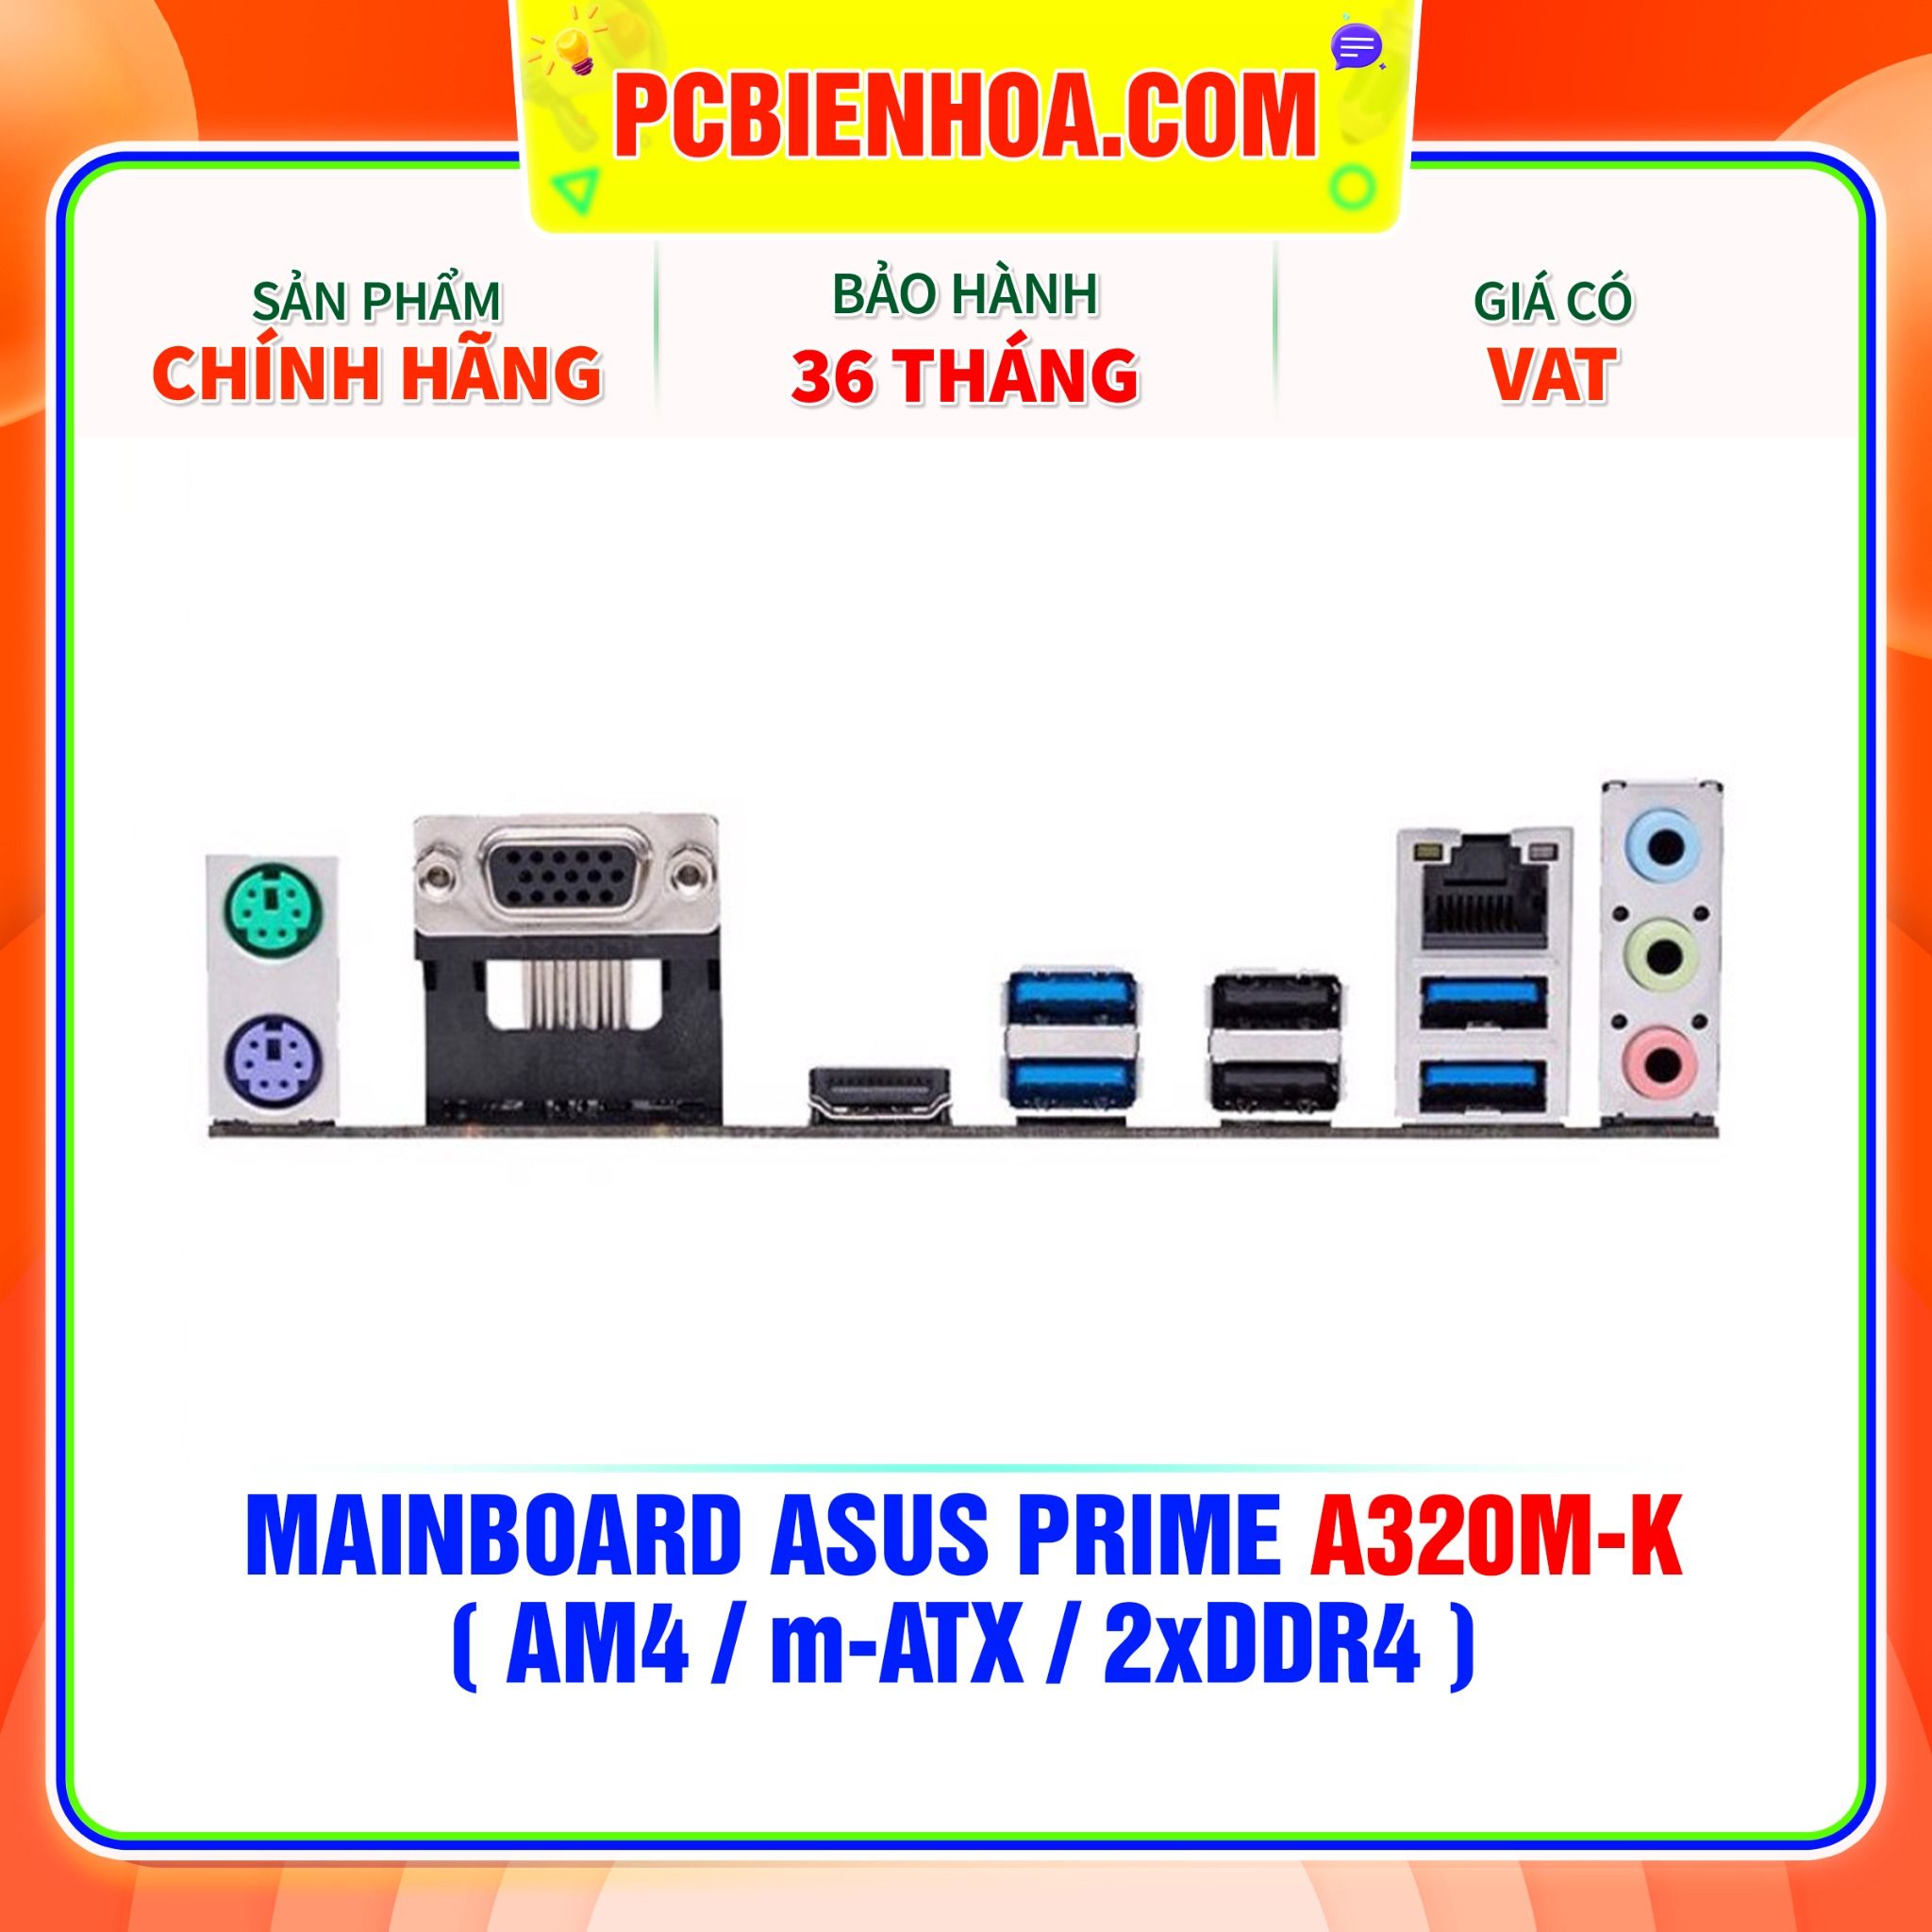  MAINBOARD ASUS PRIME A320M-K ( AM4 / m-ATX / 2xDDR4 ) 